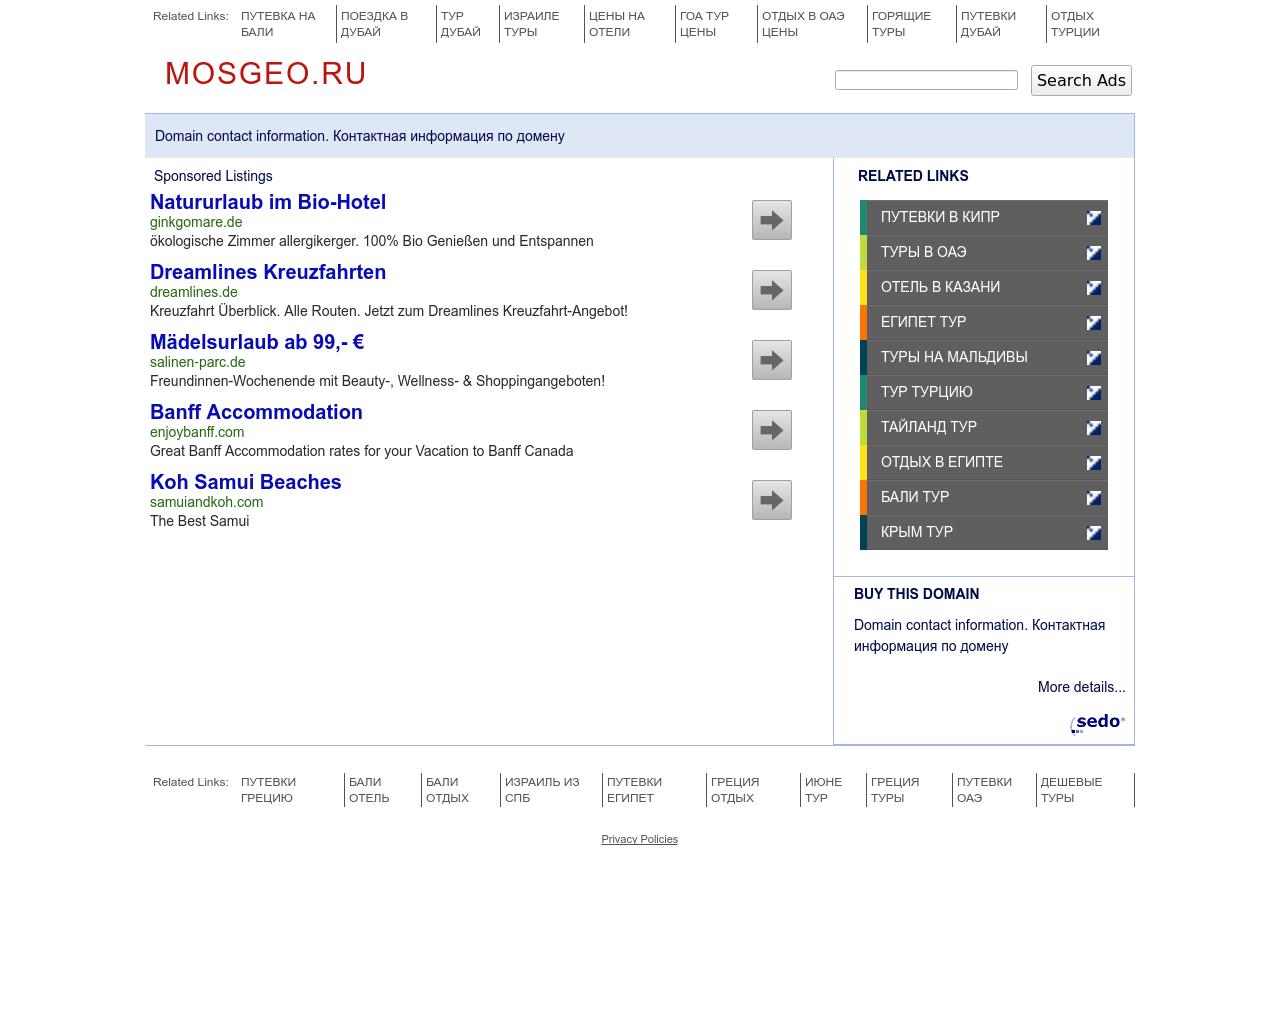 Изображение сайта mosgeo.ru в разрешении 1280x1024